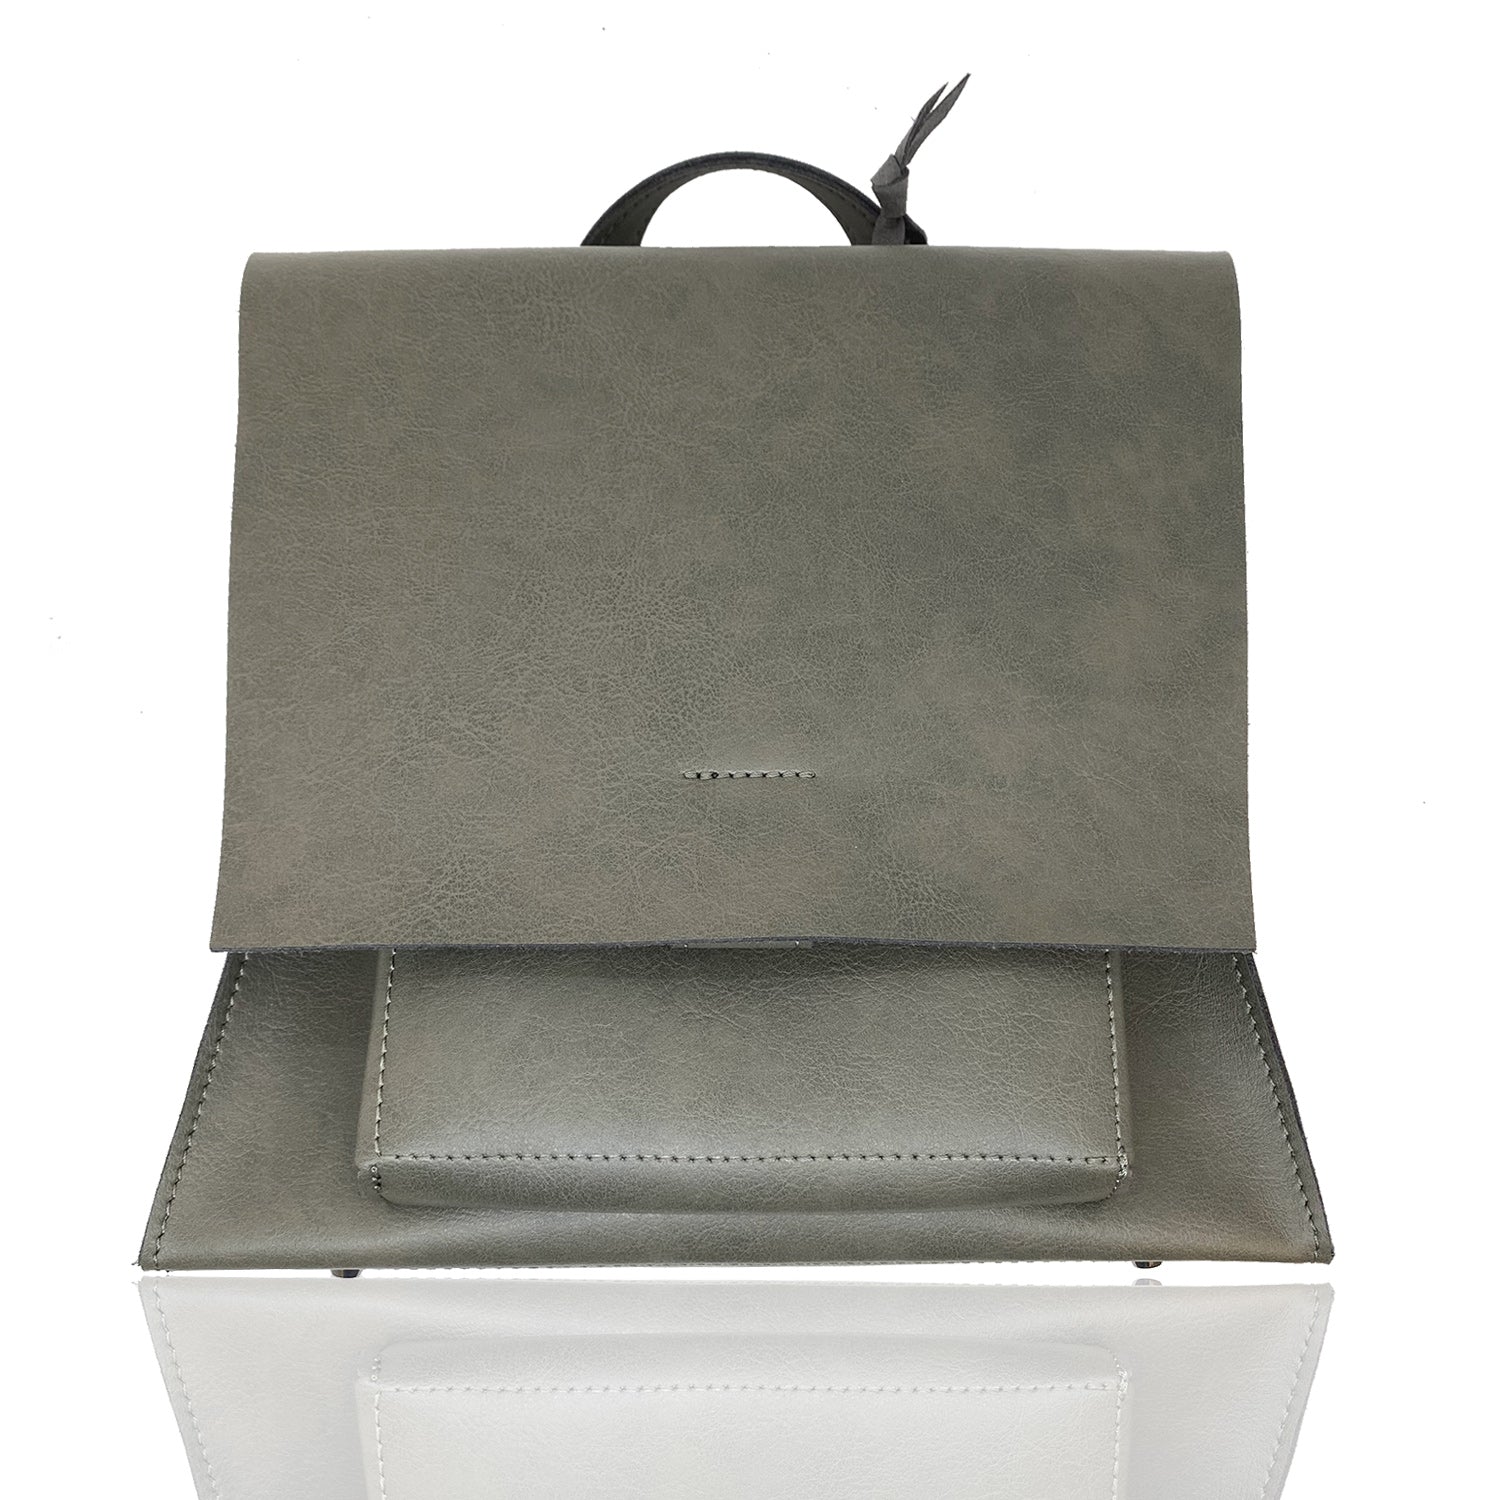 Bärn Shoulder - Premium Shoulder Bag from L&E Studio